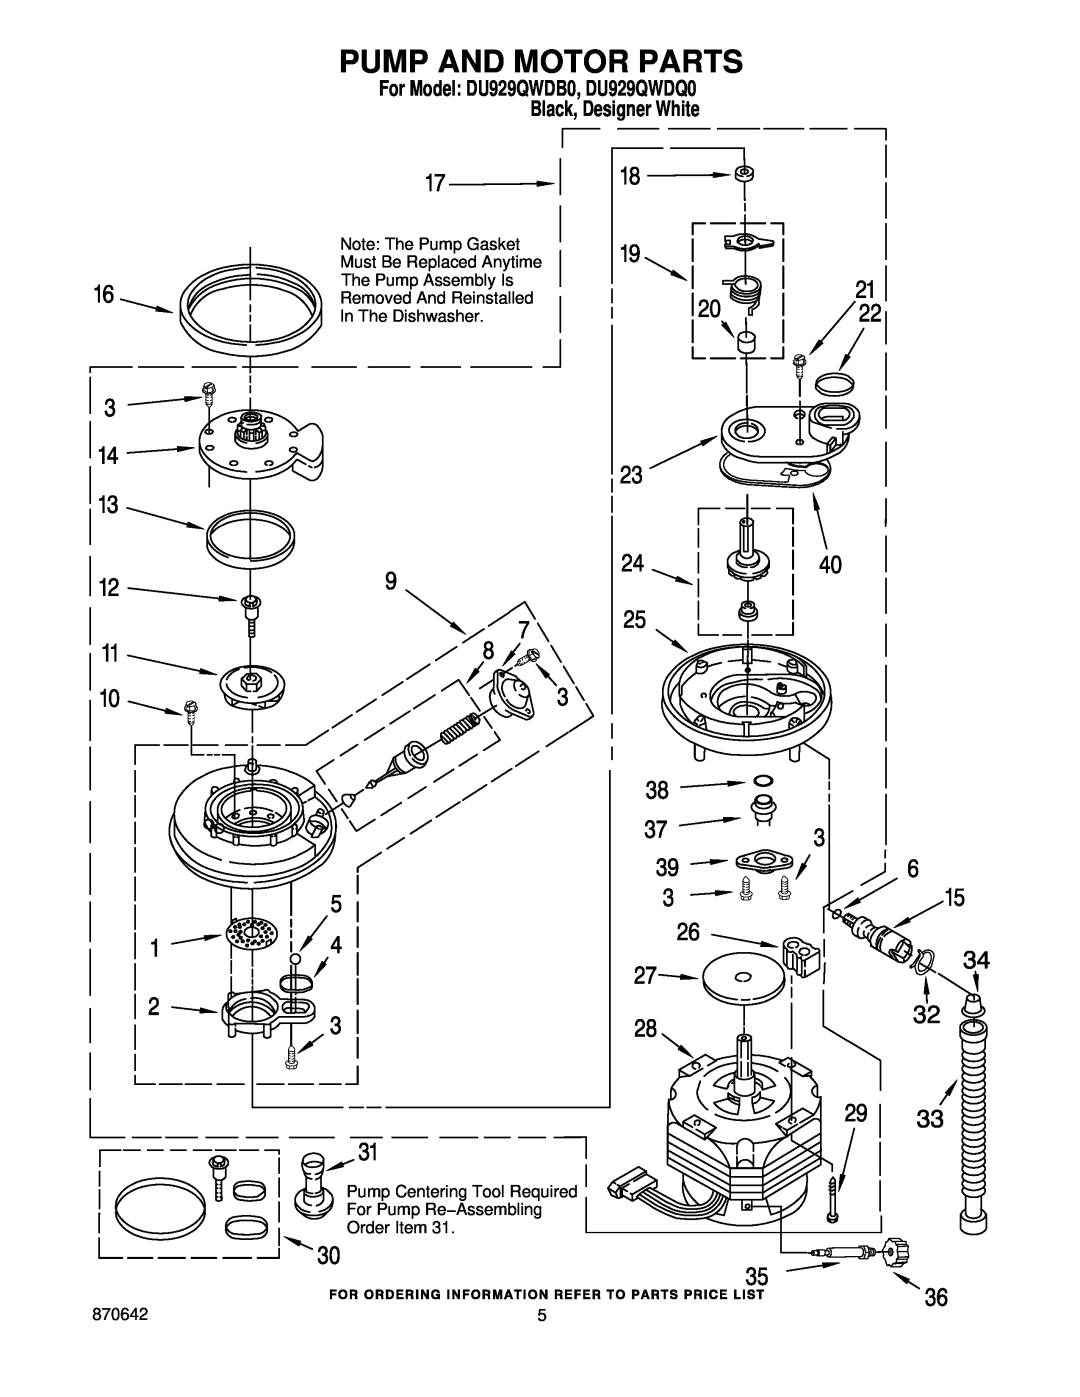 Maytag manual Pump And Motor Parts, For Model DU929QWDB0, DU929QWDQ0 Black, Designer White 